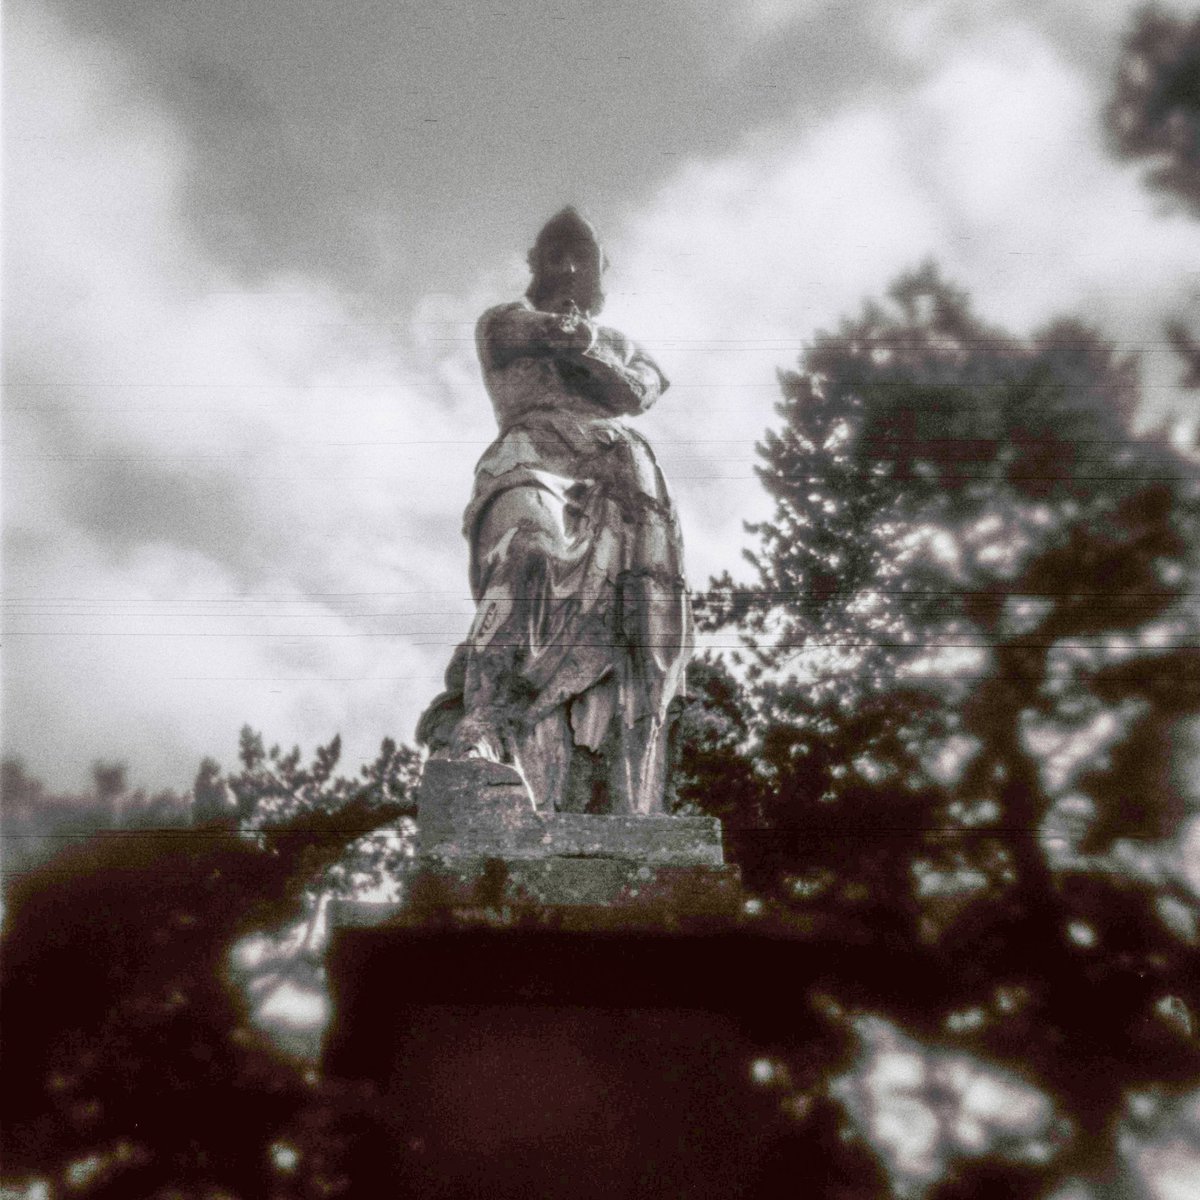 My final posting for Holga Week. The statue of the lady in the park.
@HolgaWeek 

#holgaweek #holgacamera #holga120s #filmphotography #mediumformat #120film #statue #park #autumn #outdoors #believeinfilm